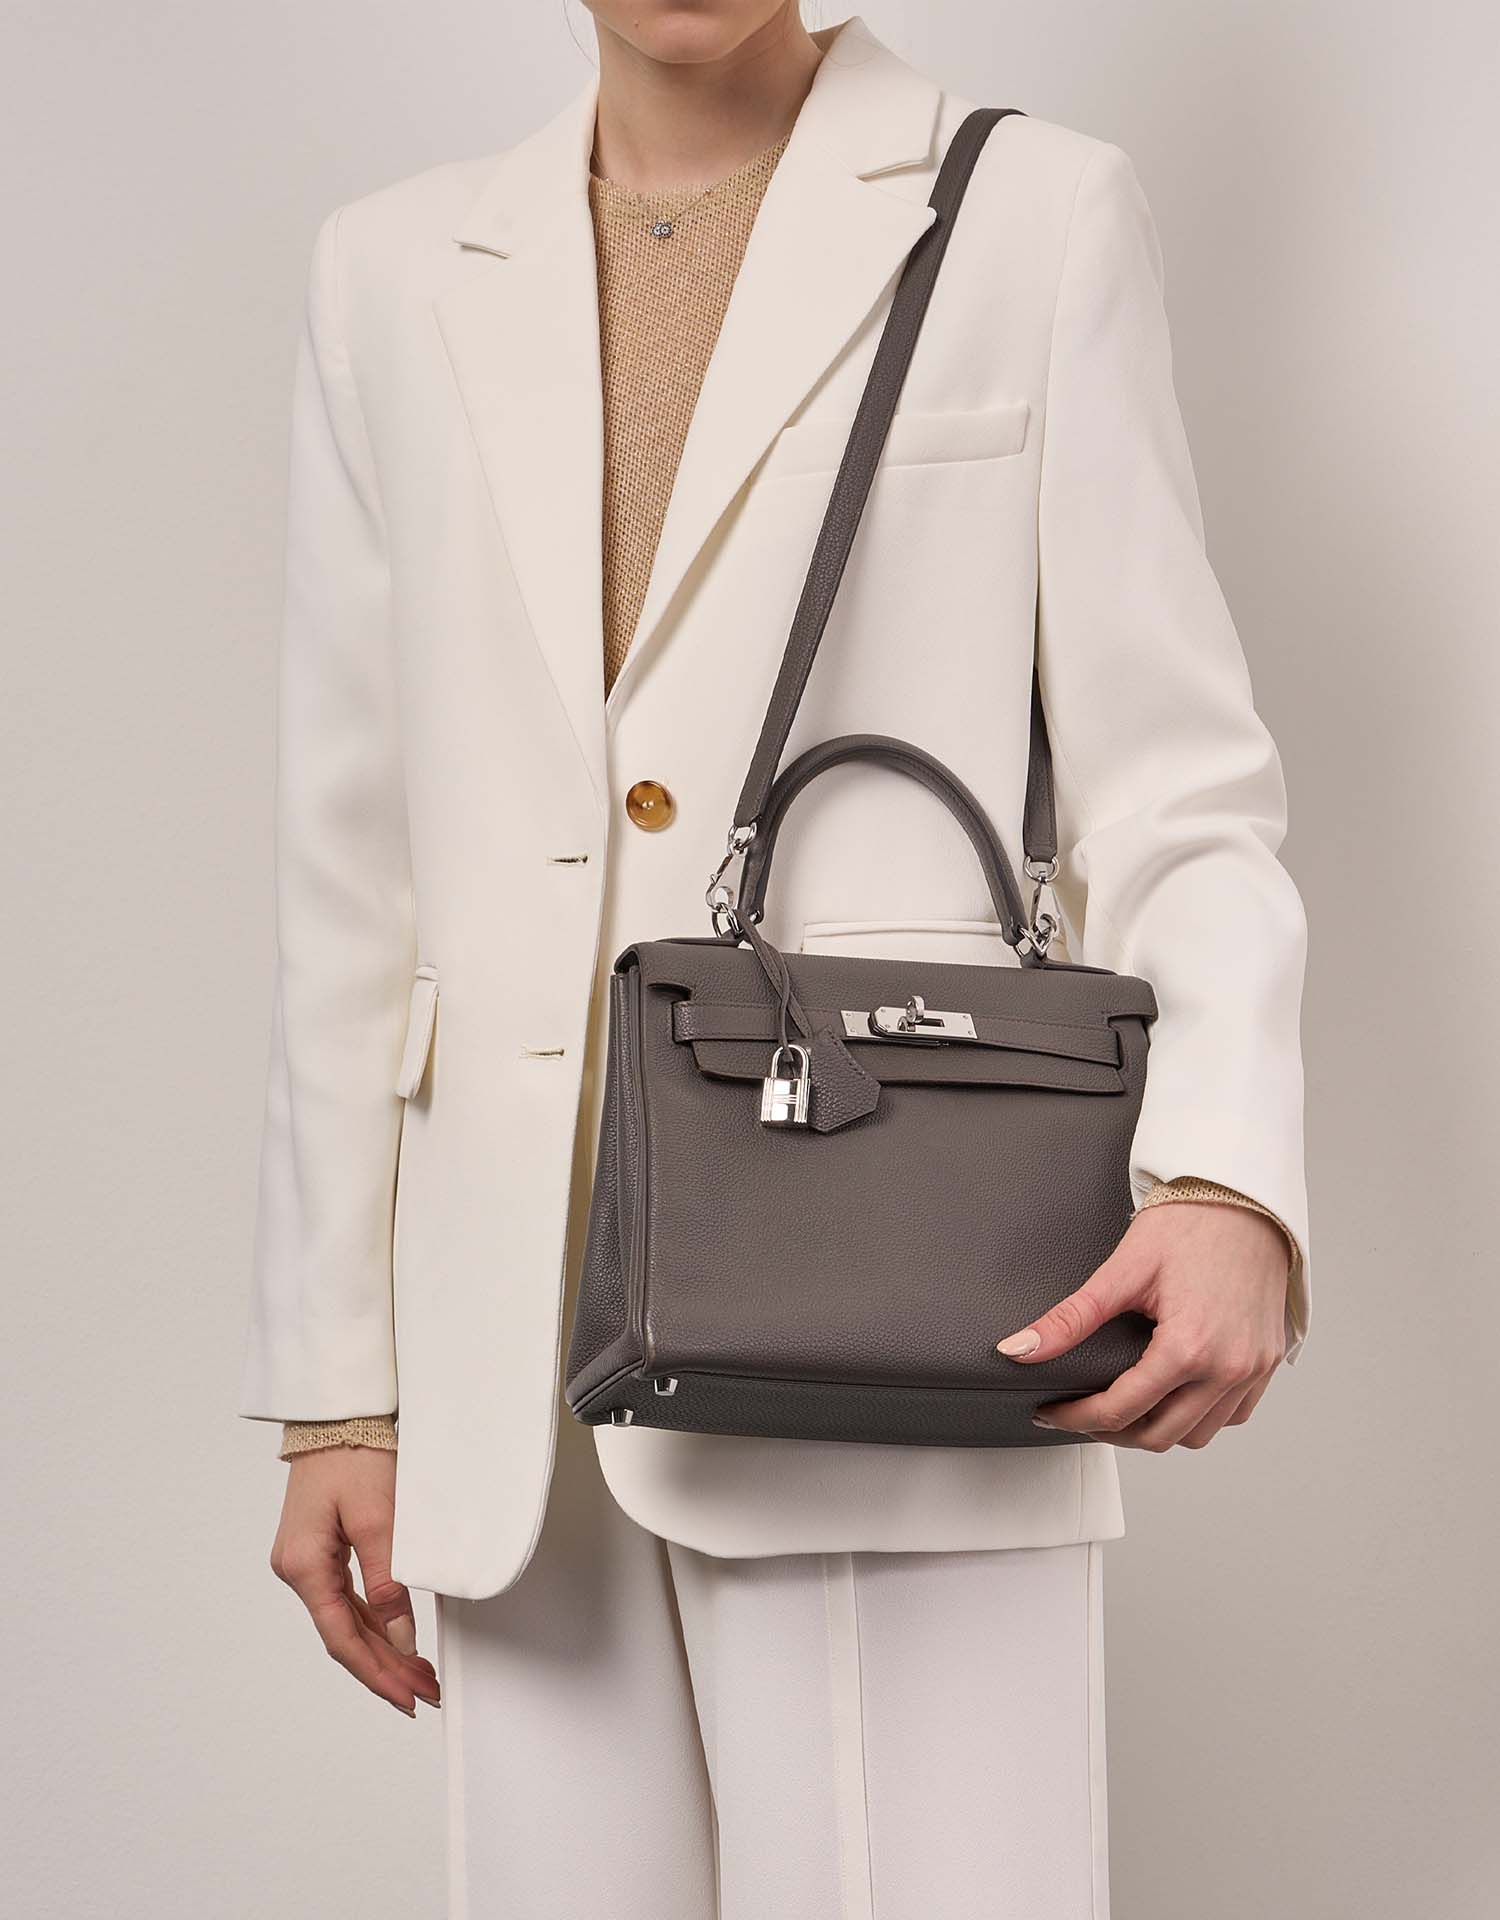 Hermès Kelly 28 Etain Sizes Worn | Sell your designer bag on Saclab.com